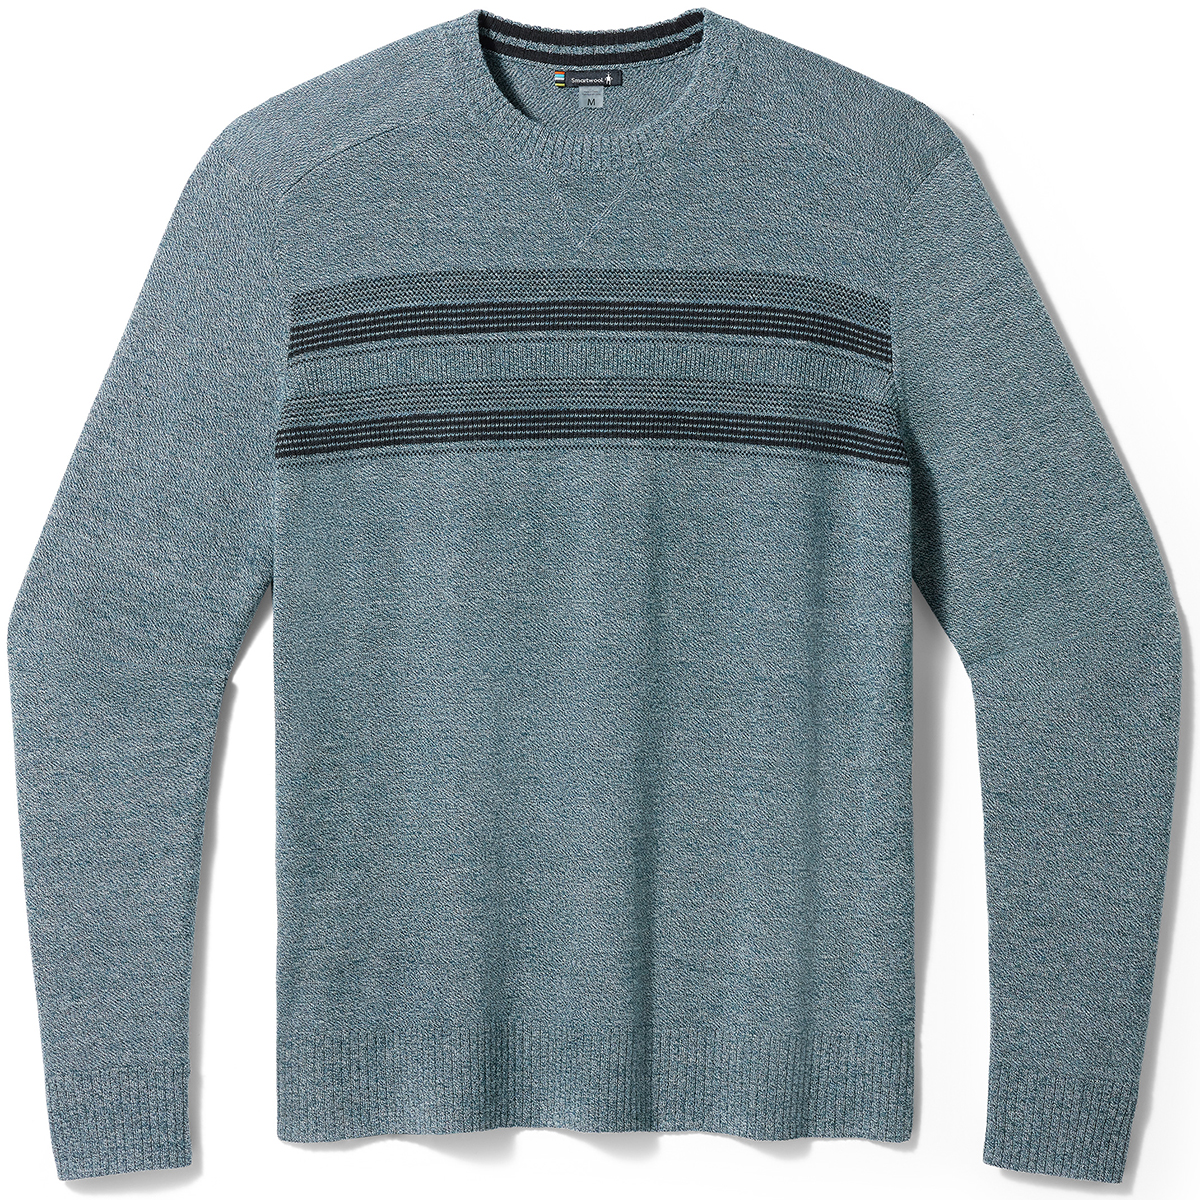 Smartwool Men's Sparwood Stripe Crew Sweater - Size L